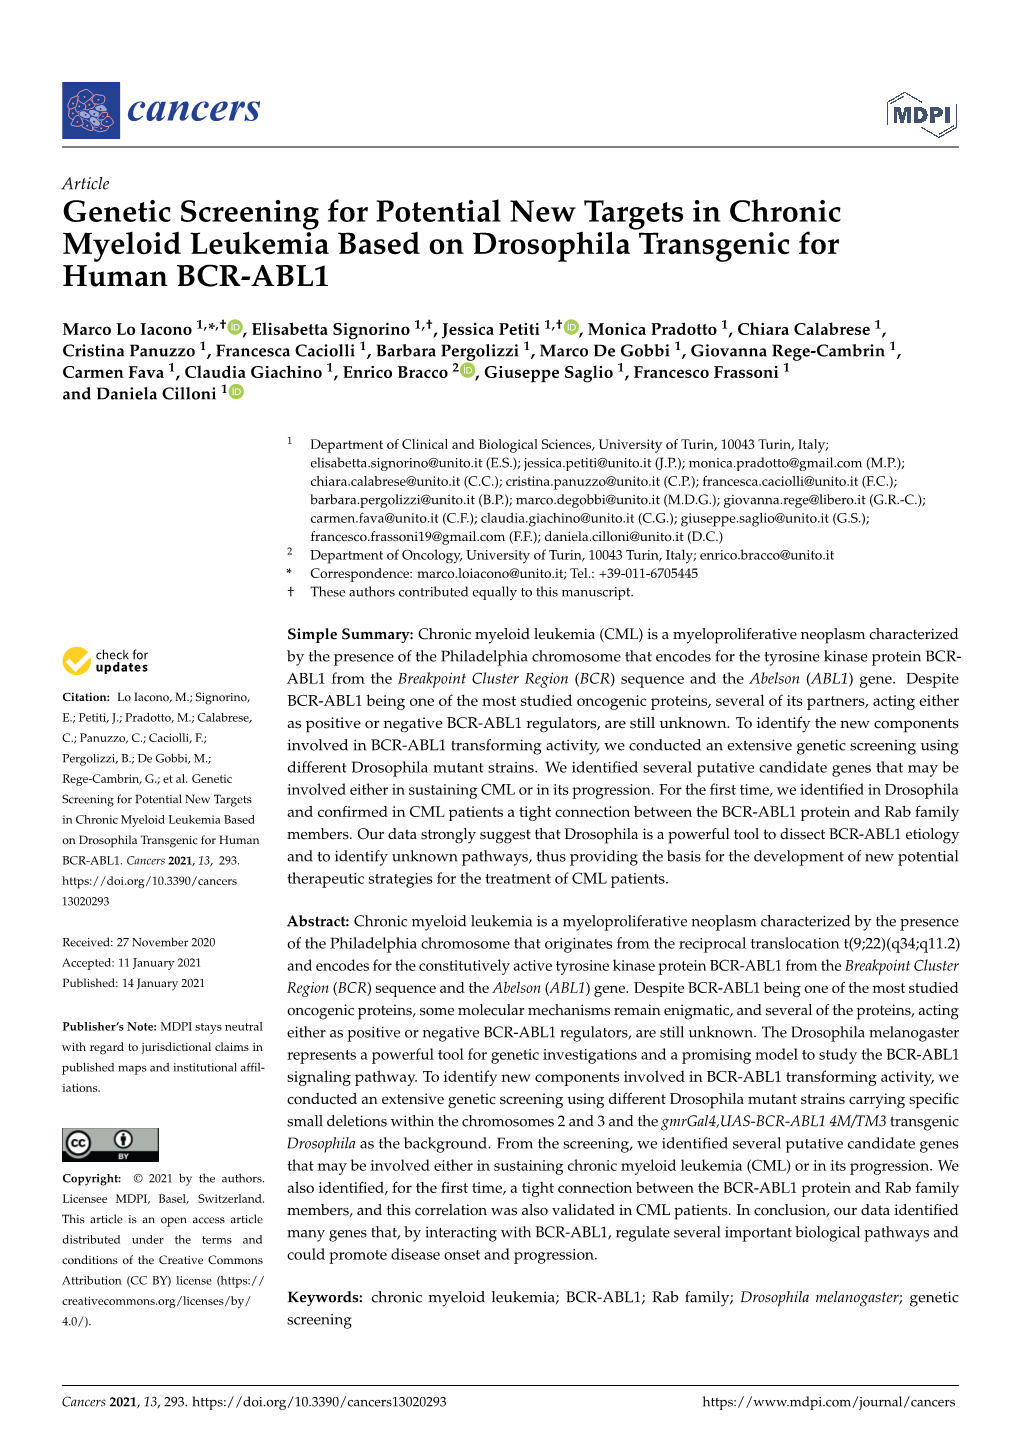 Genetic Screening for Potential New Targets in Chronic Myeloid Leukemia Based on Drosophila Transgenic for Human BCR-ABL1